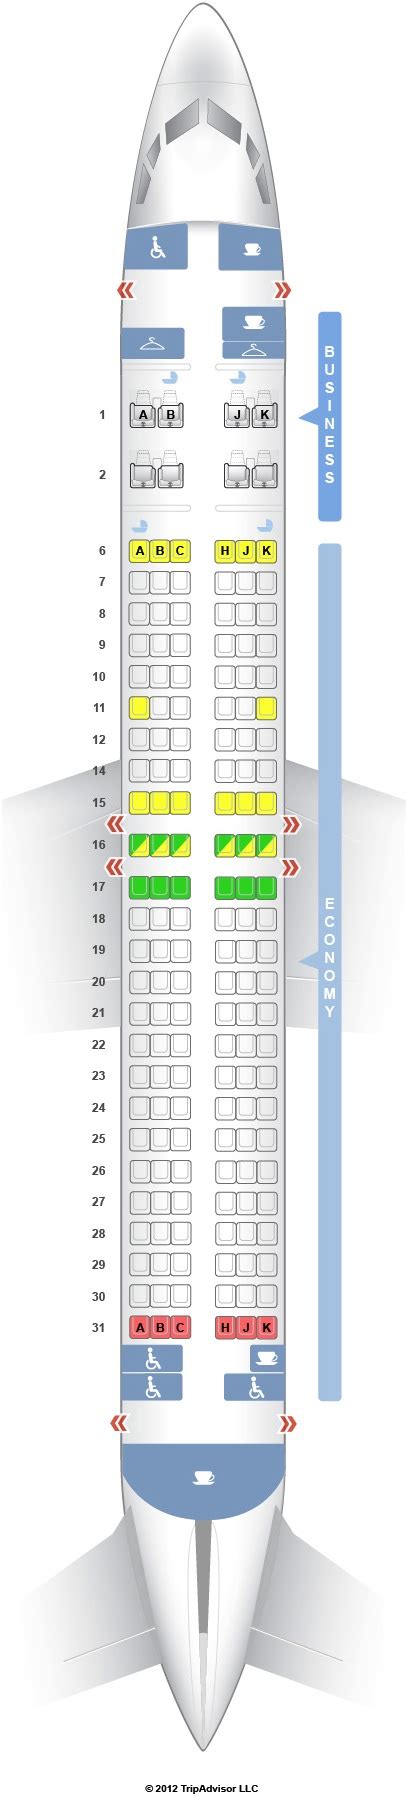 Seatguru Seat Map China Airlines